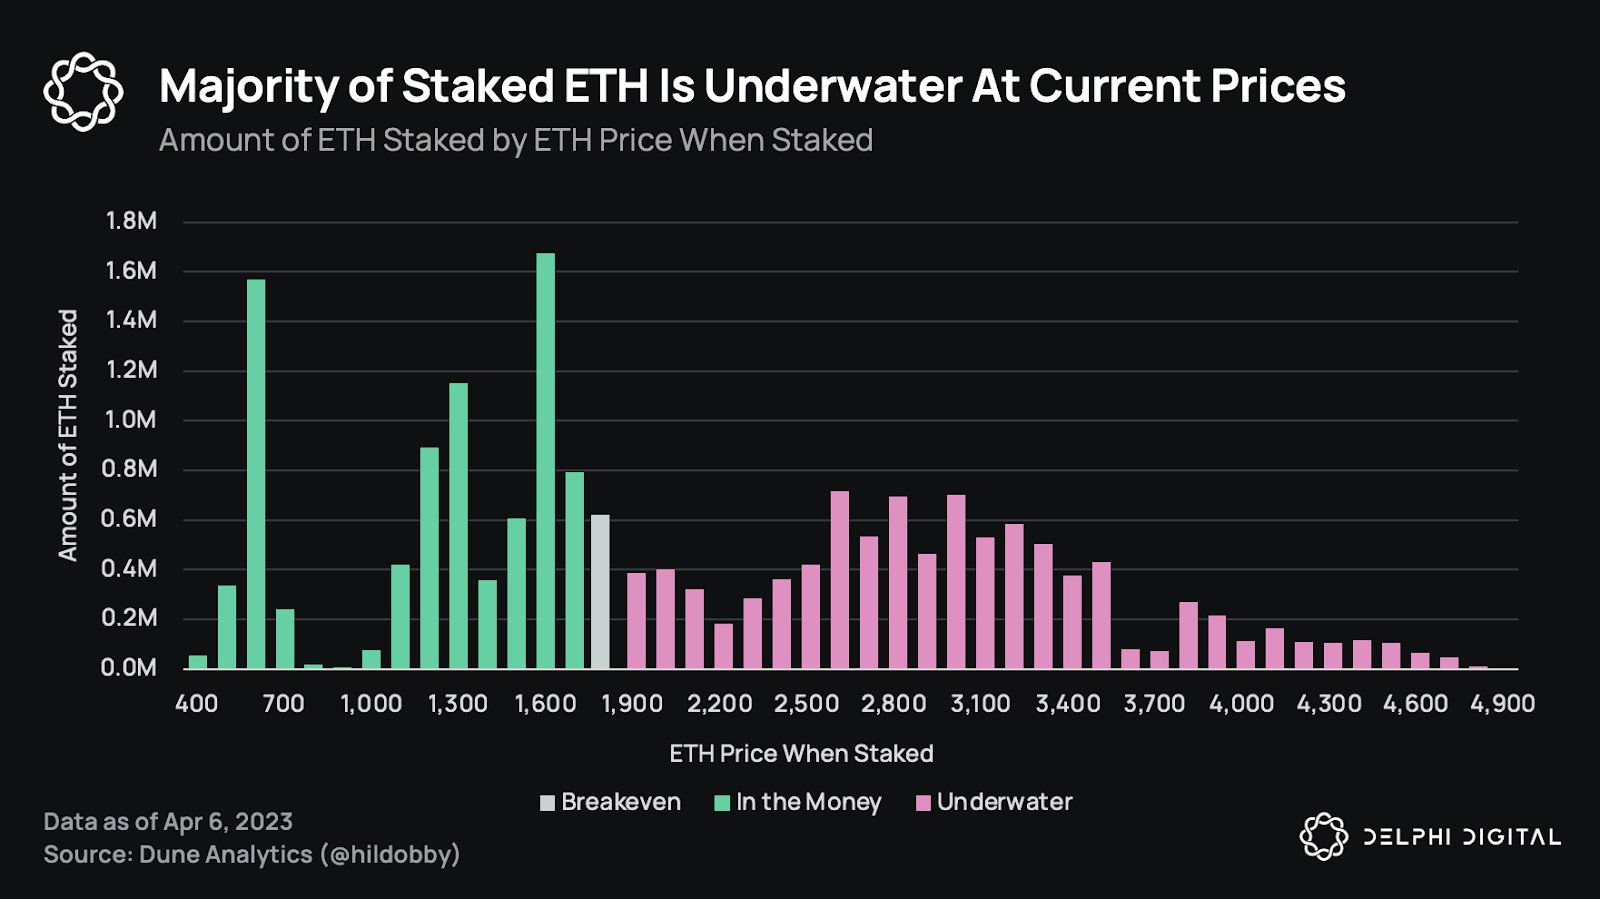 Majority of staked ETH is underwater